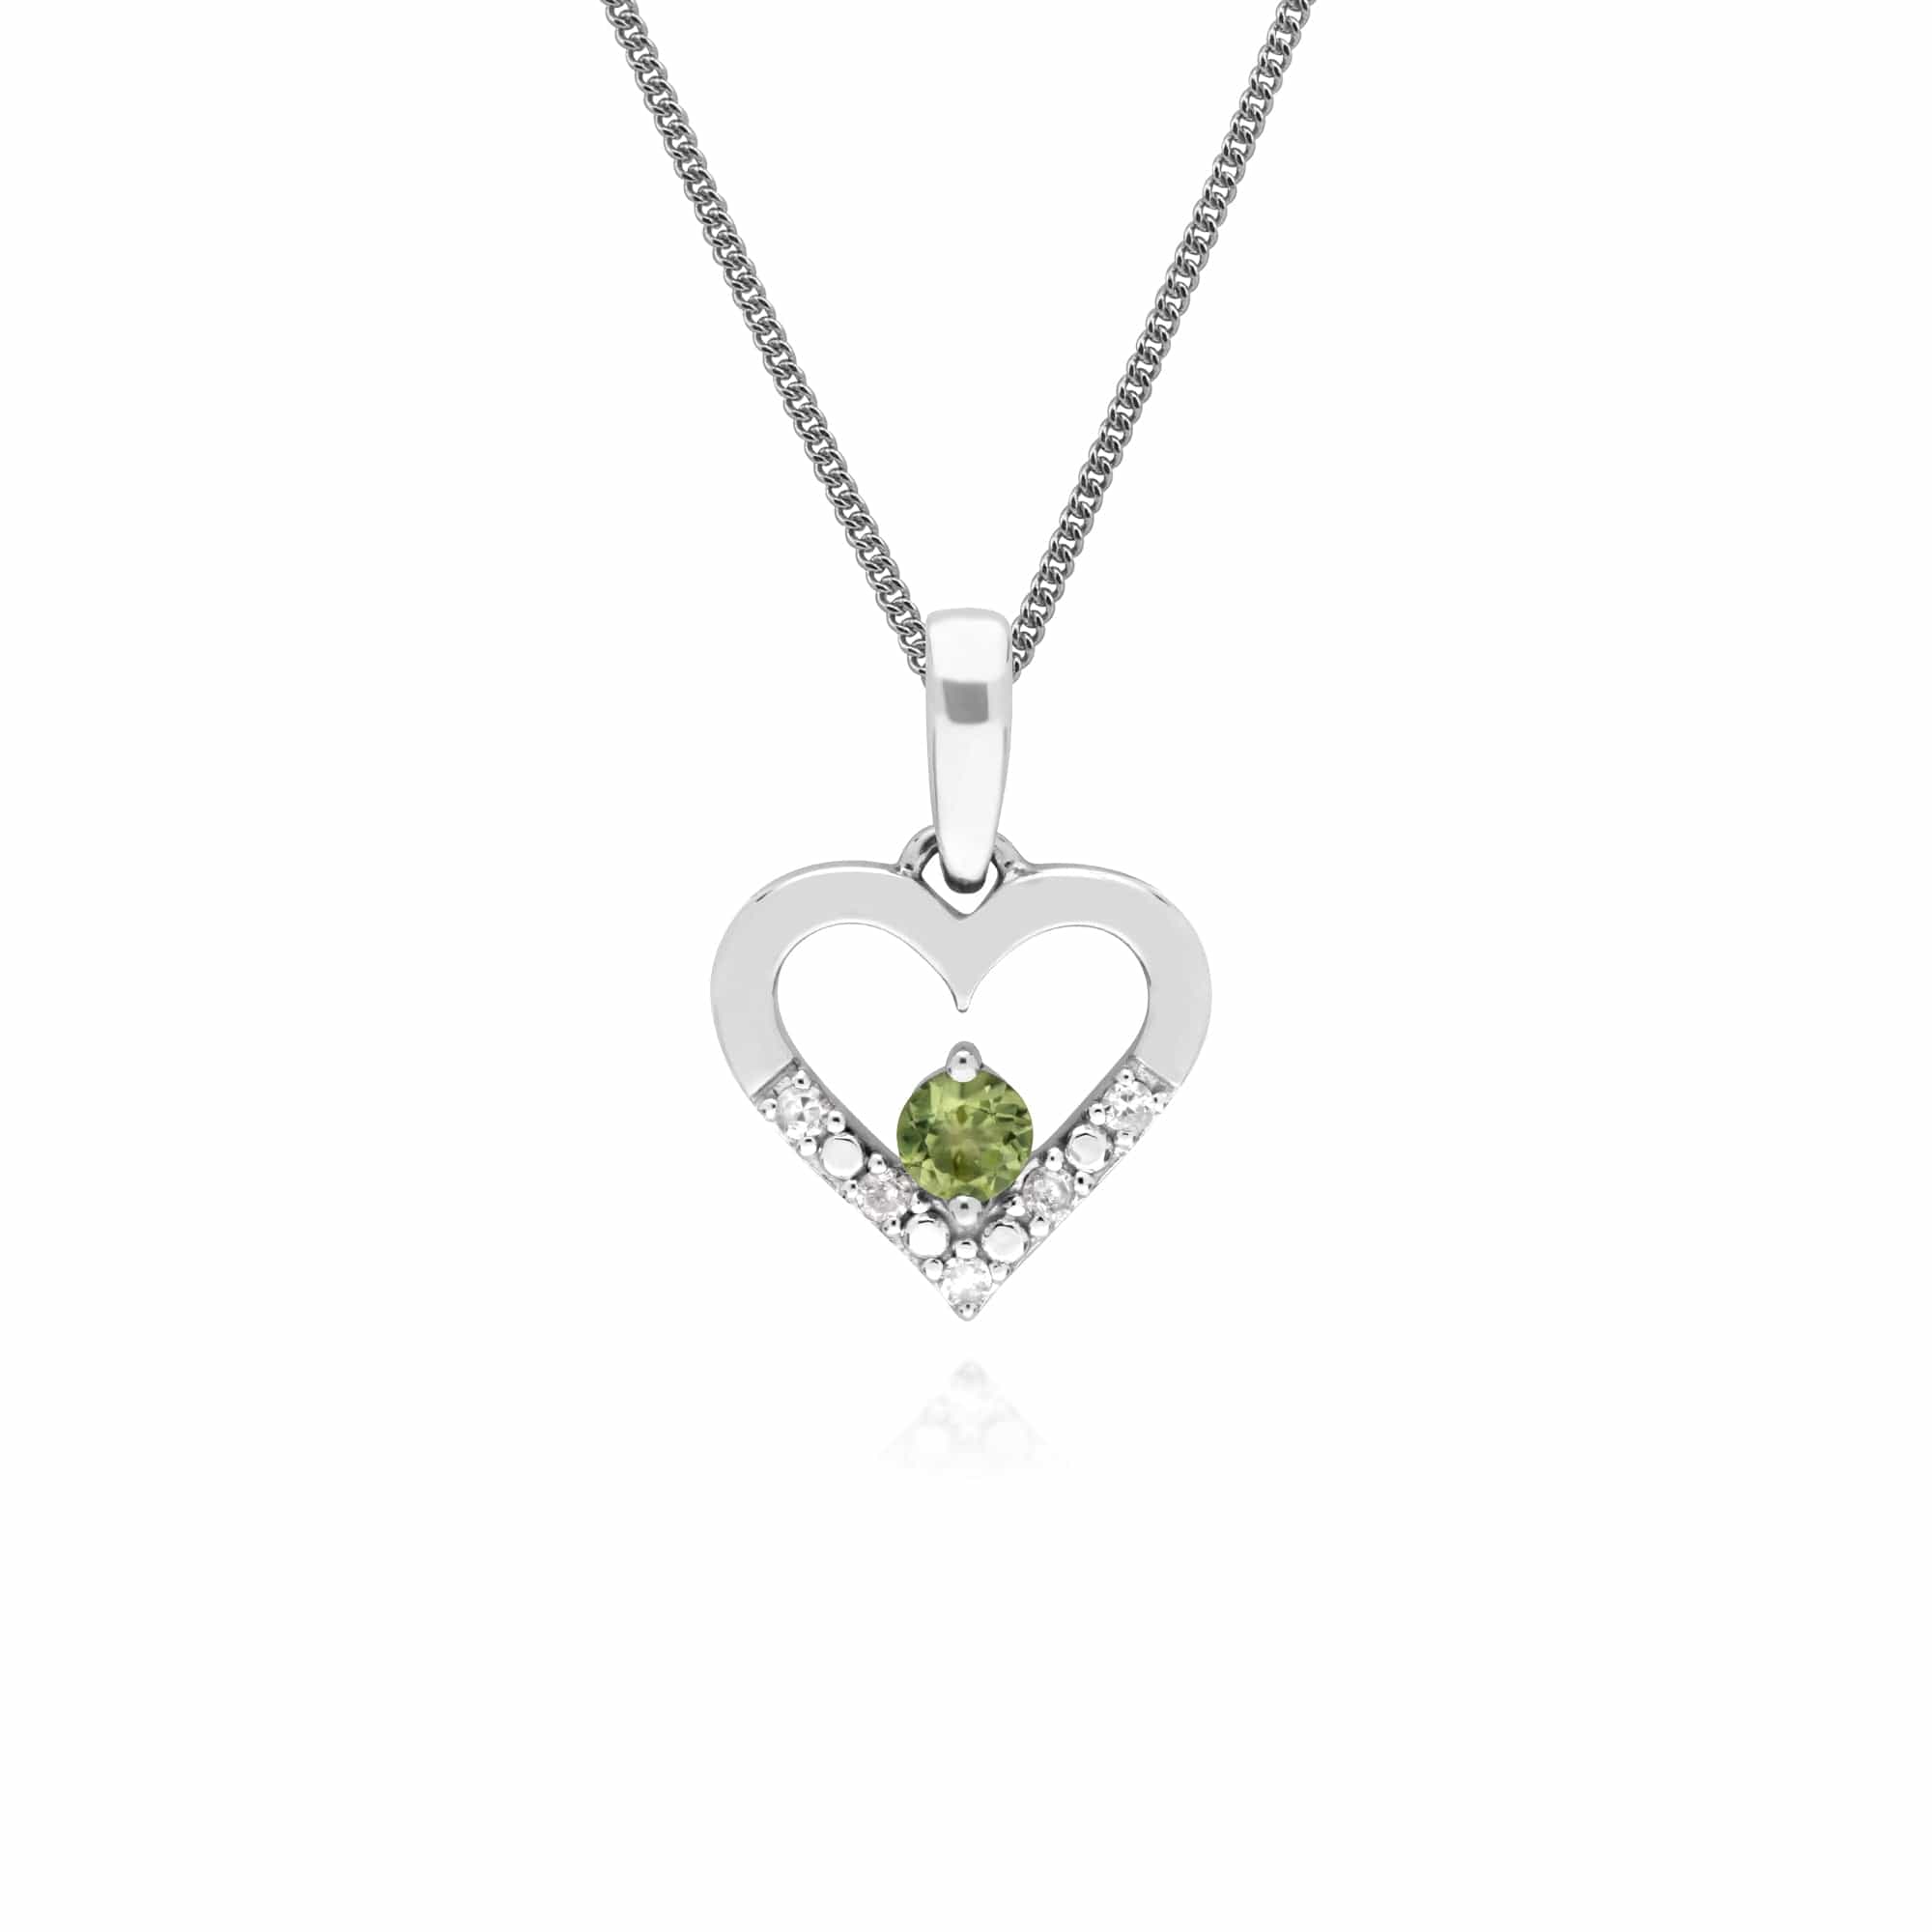 162E0258089-162P0219089 Classic Round Peridot & Diamond Heart Drop Earrings & Pendant Set in 9ct White Gold 3